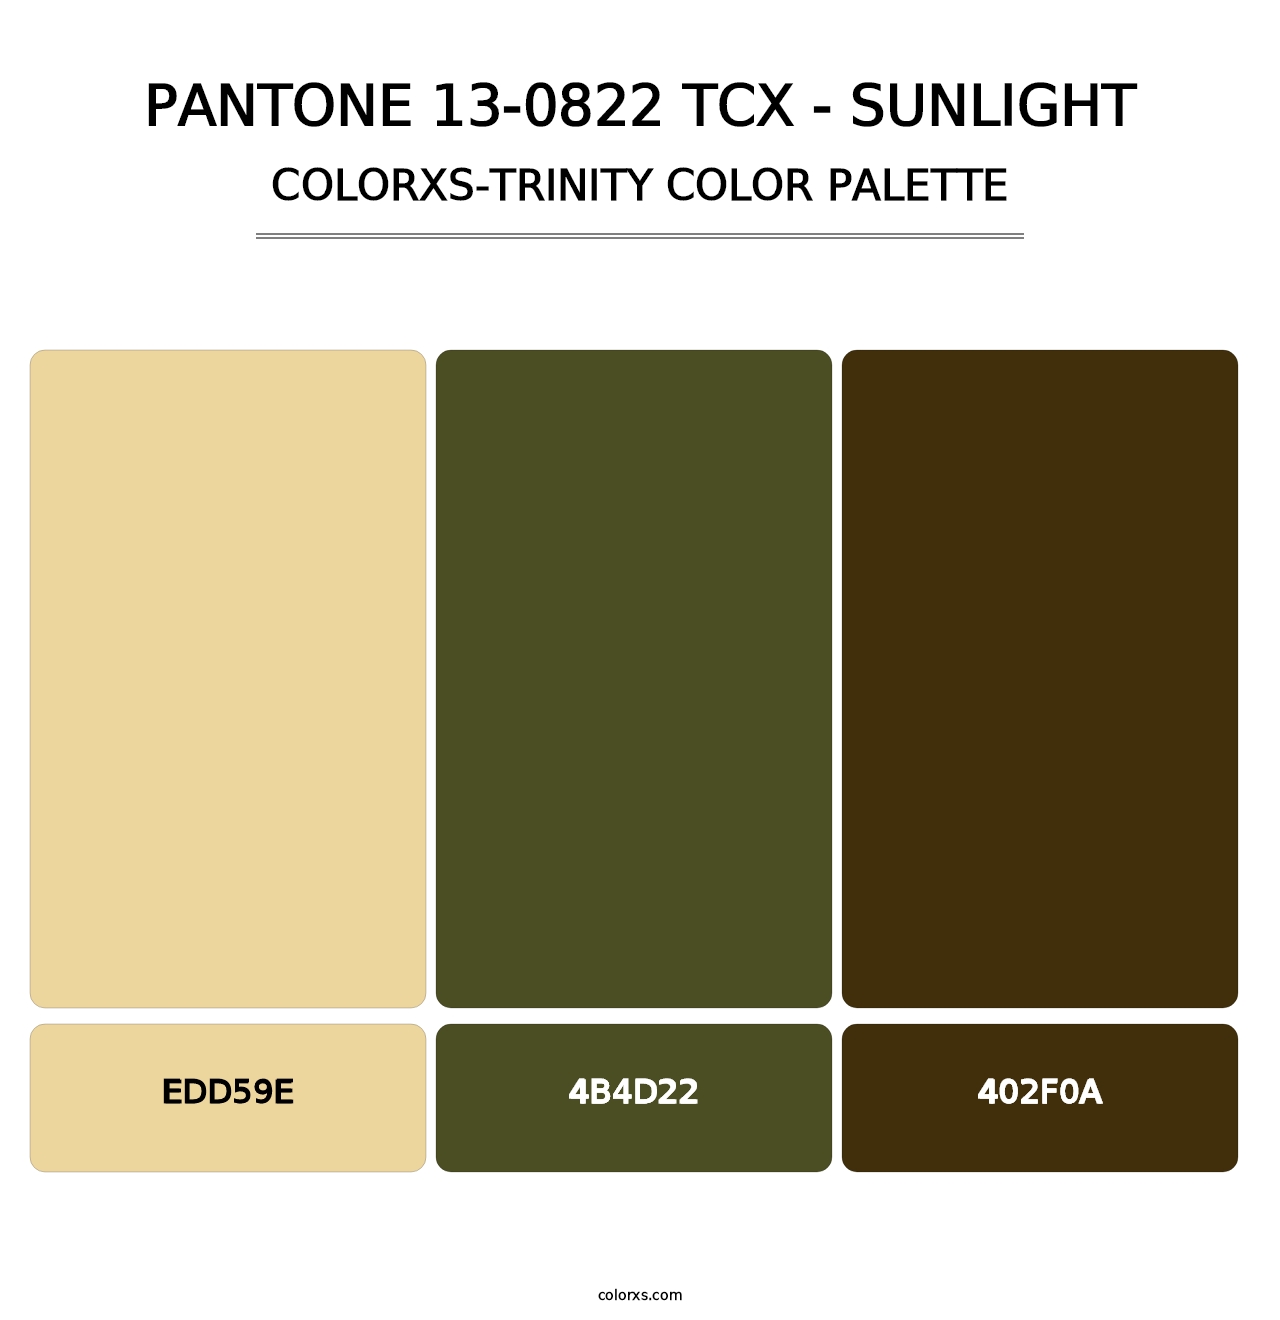 PANTONE 13-0822 TCX - Sunlight - Colorxs Trinity Palette